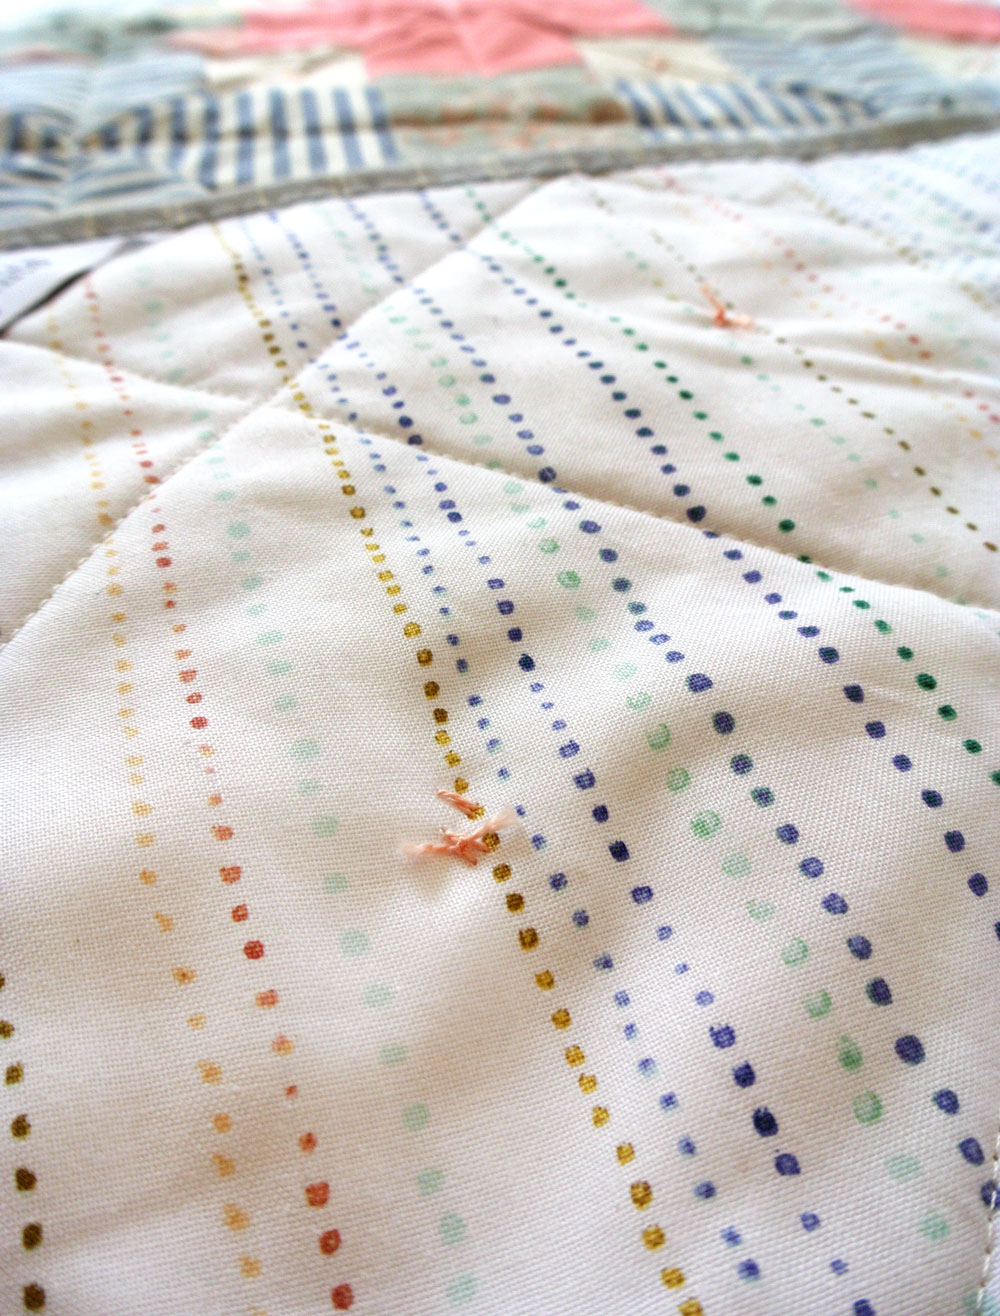 How to tie a quilt with a modern twist! | Suzy Quilts https://suzyquilts.com/how-to-tie-a-quilt-with-a-modern-twist